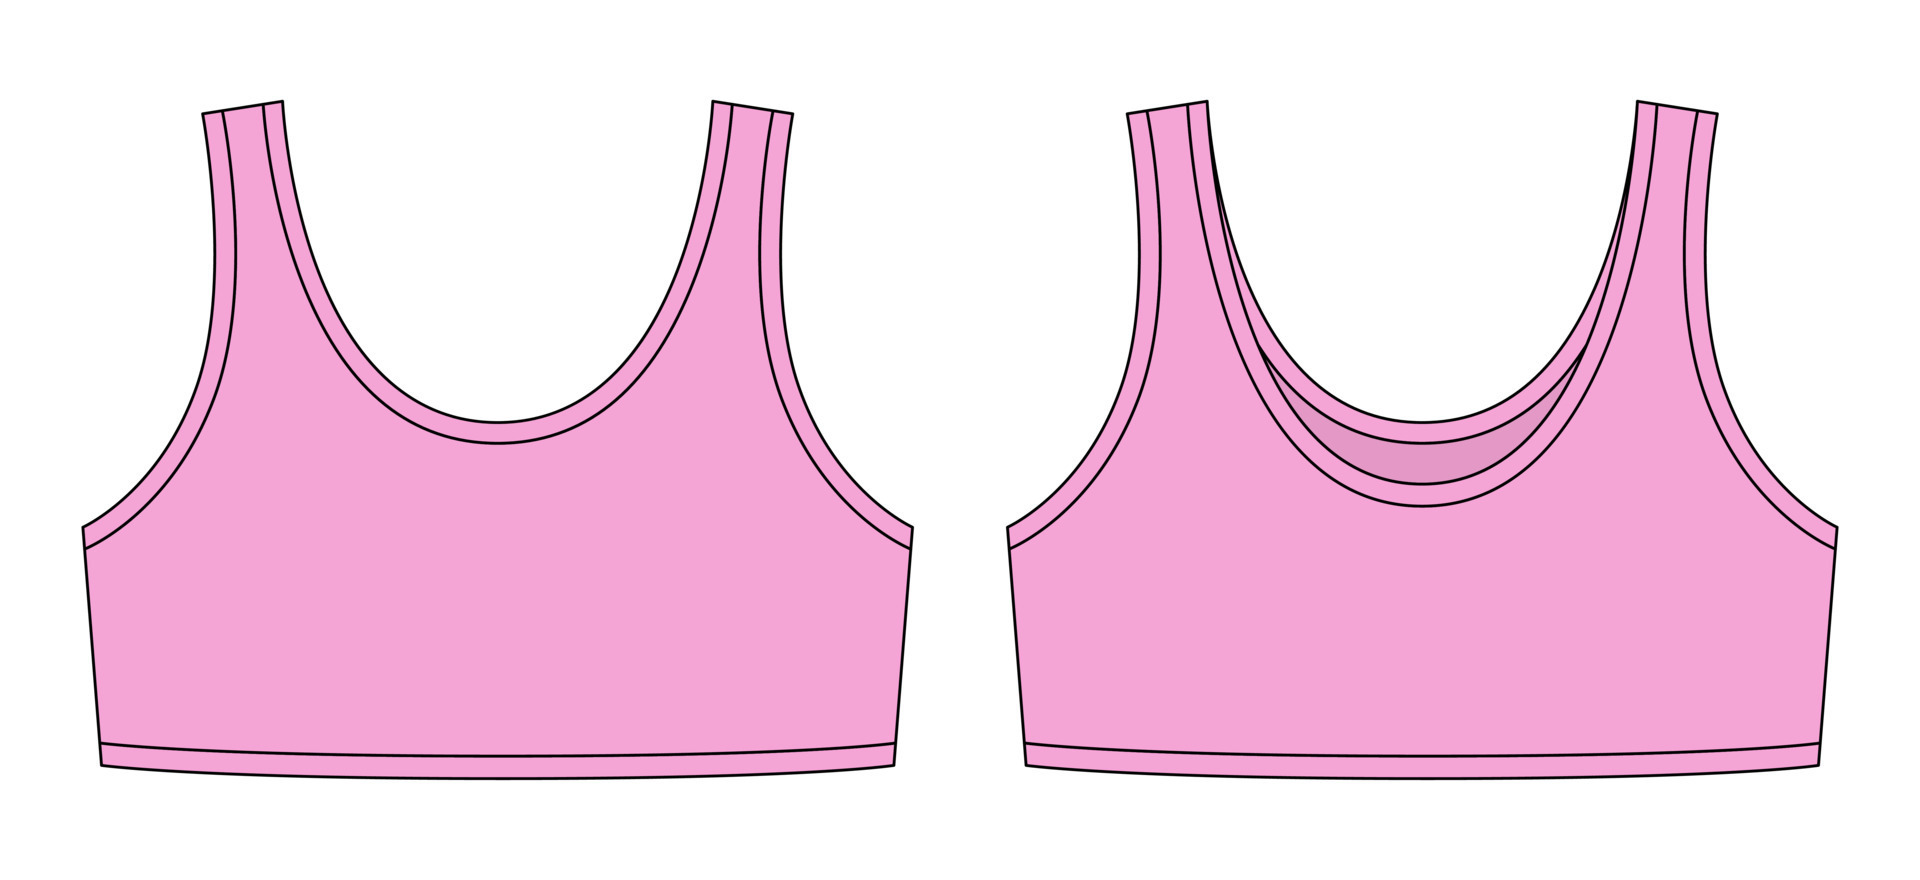 Girl bra technical sketch illustration. Pink color. Casual